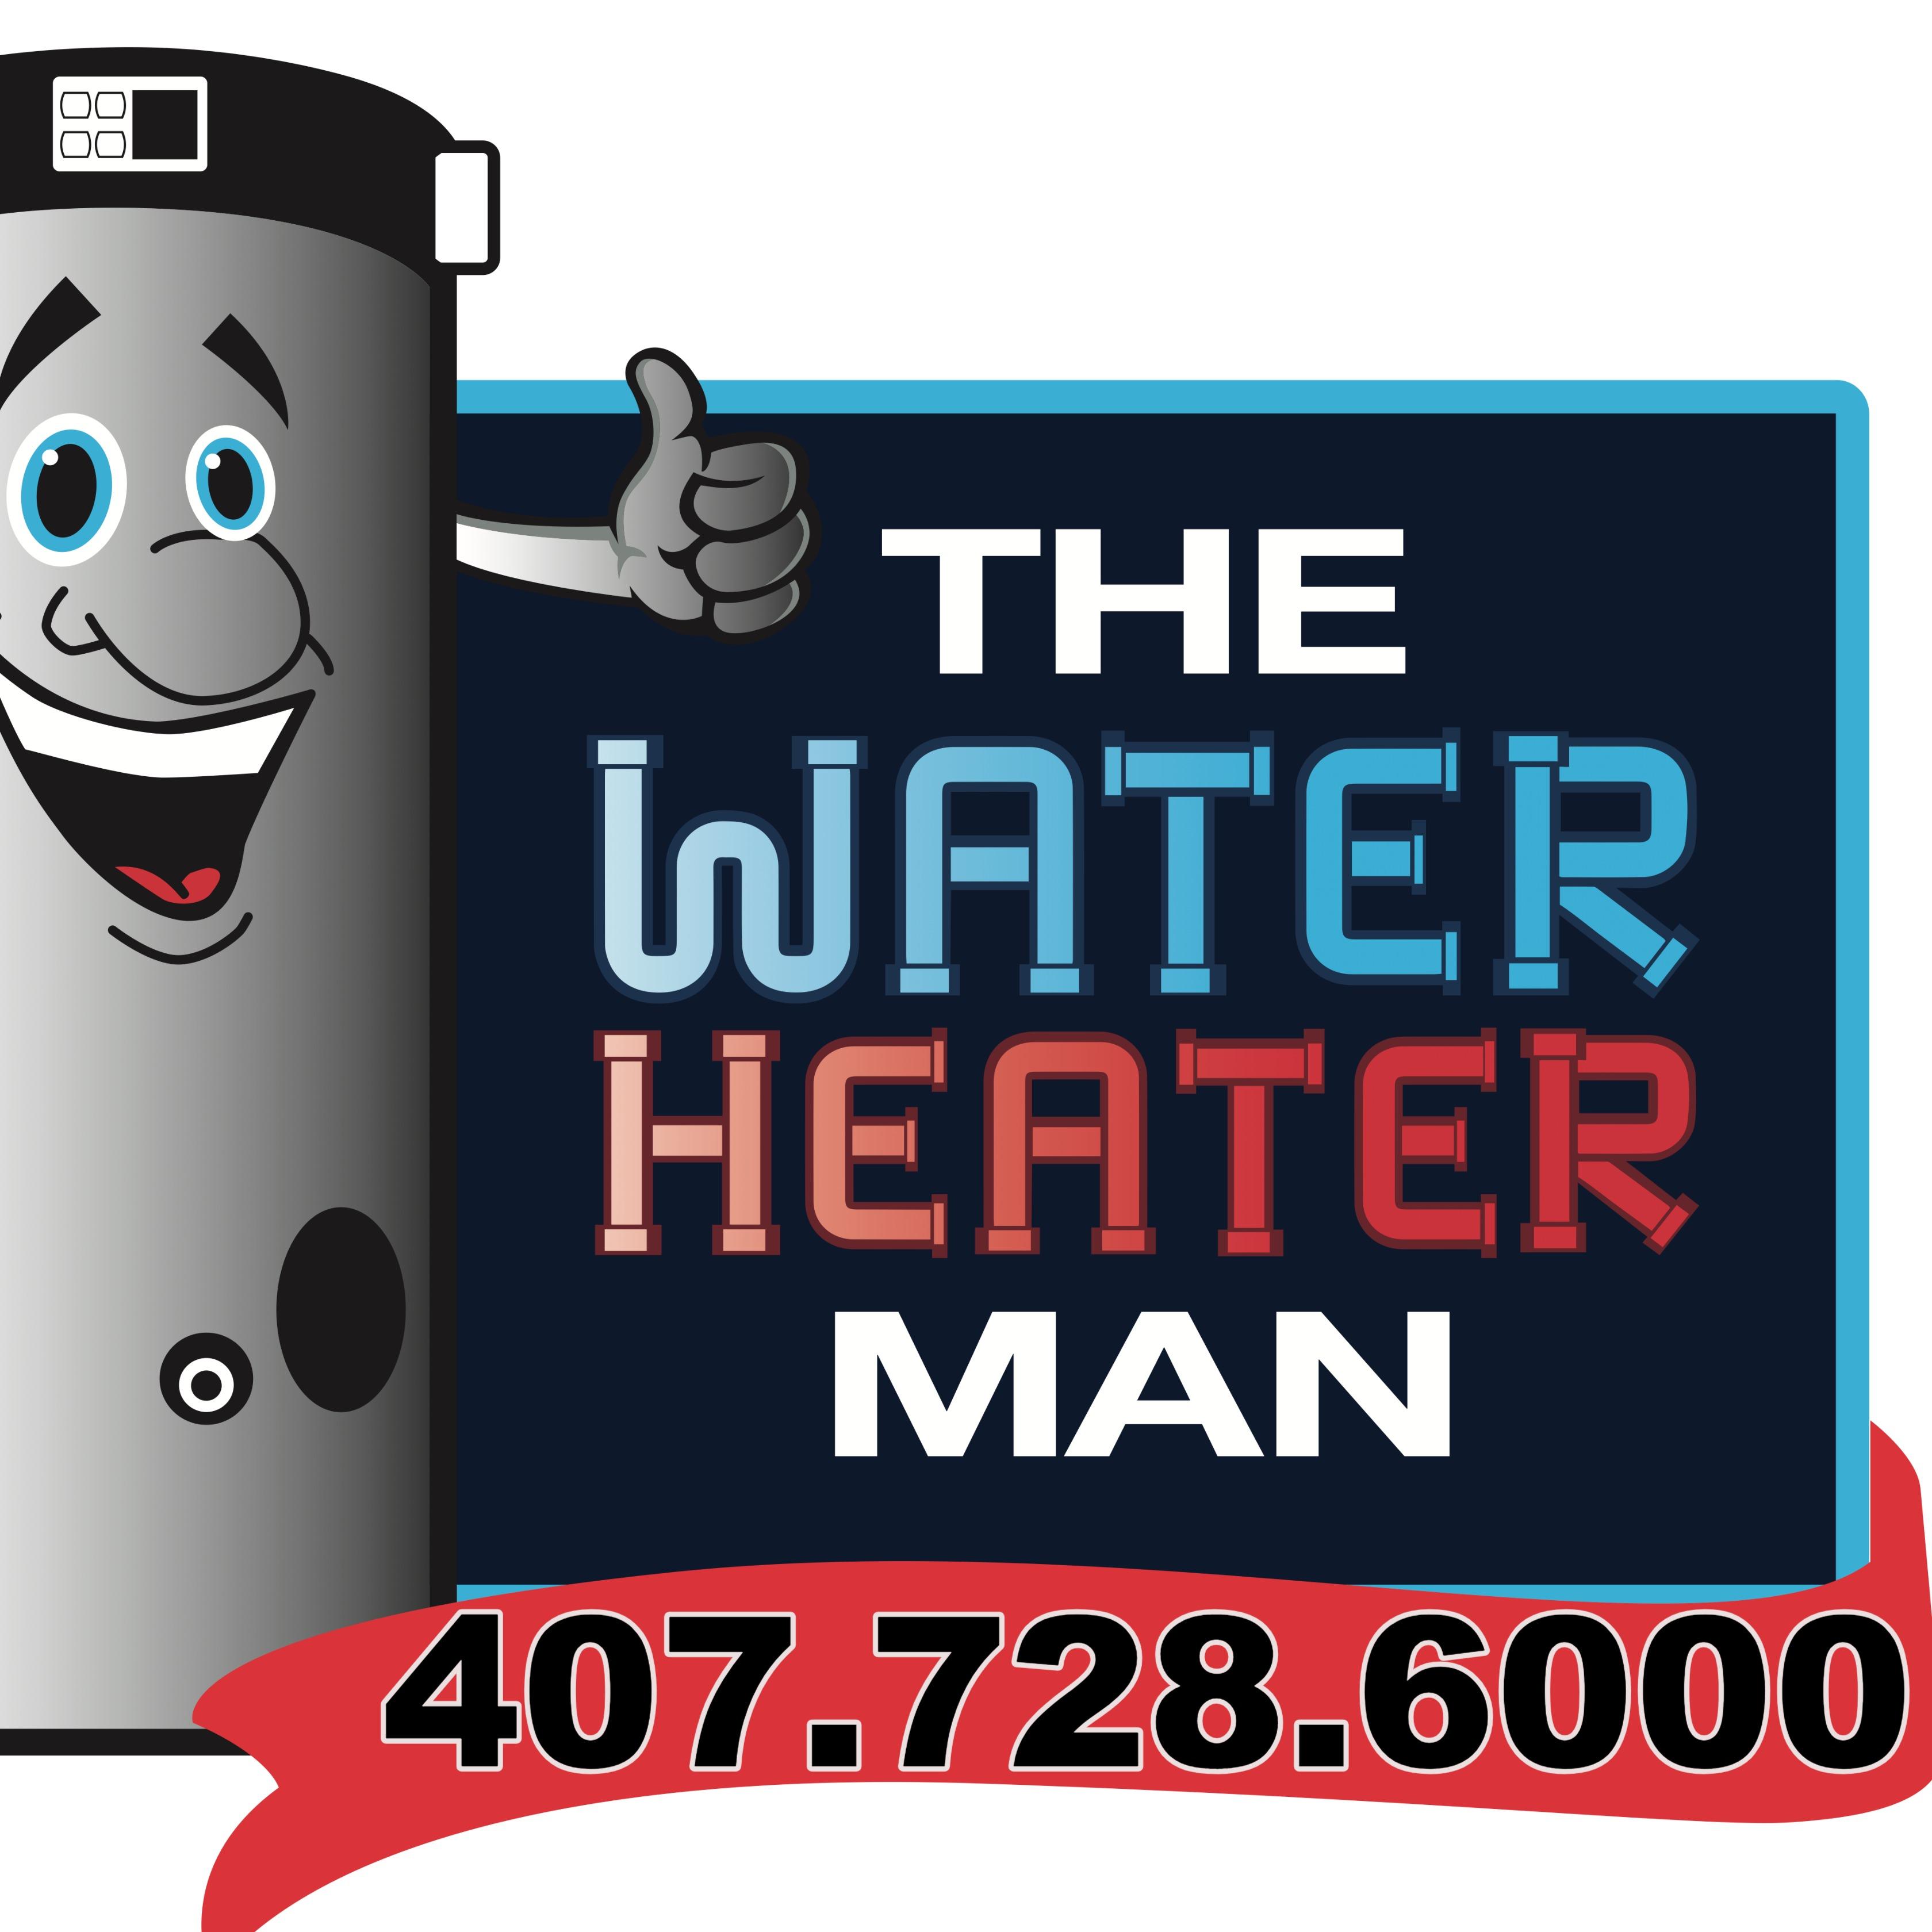 Water Heater Man Logo